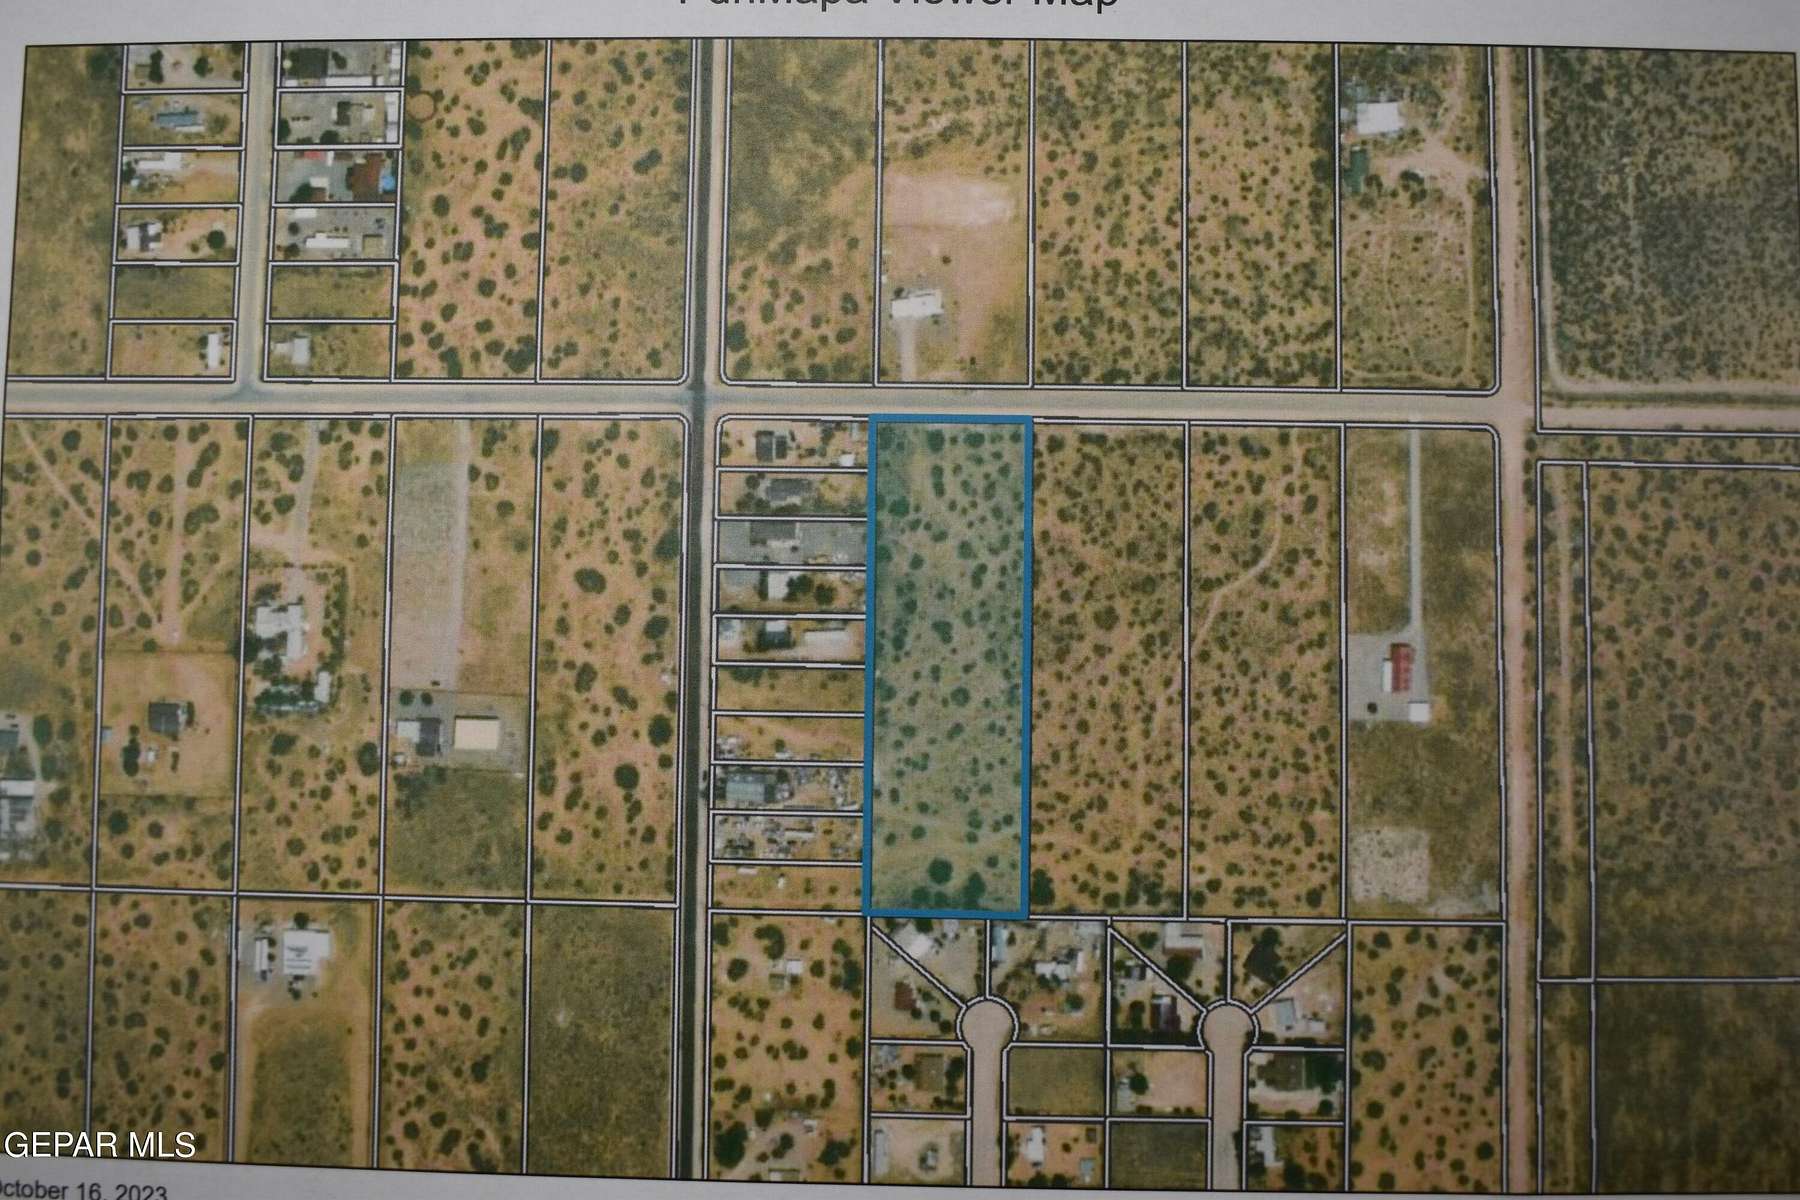 5.3 Acres of Land for Sale in El Paso, Texas